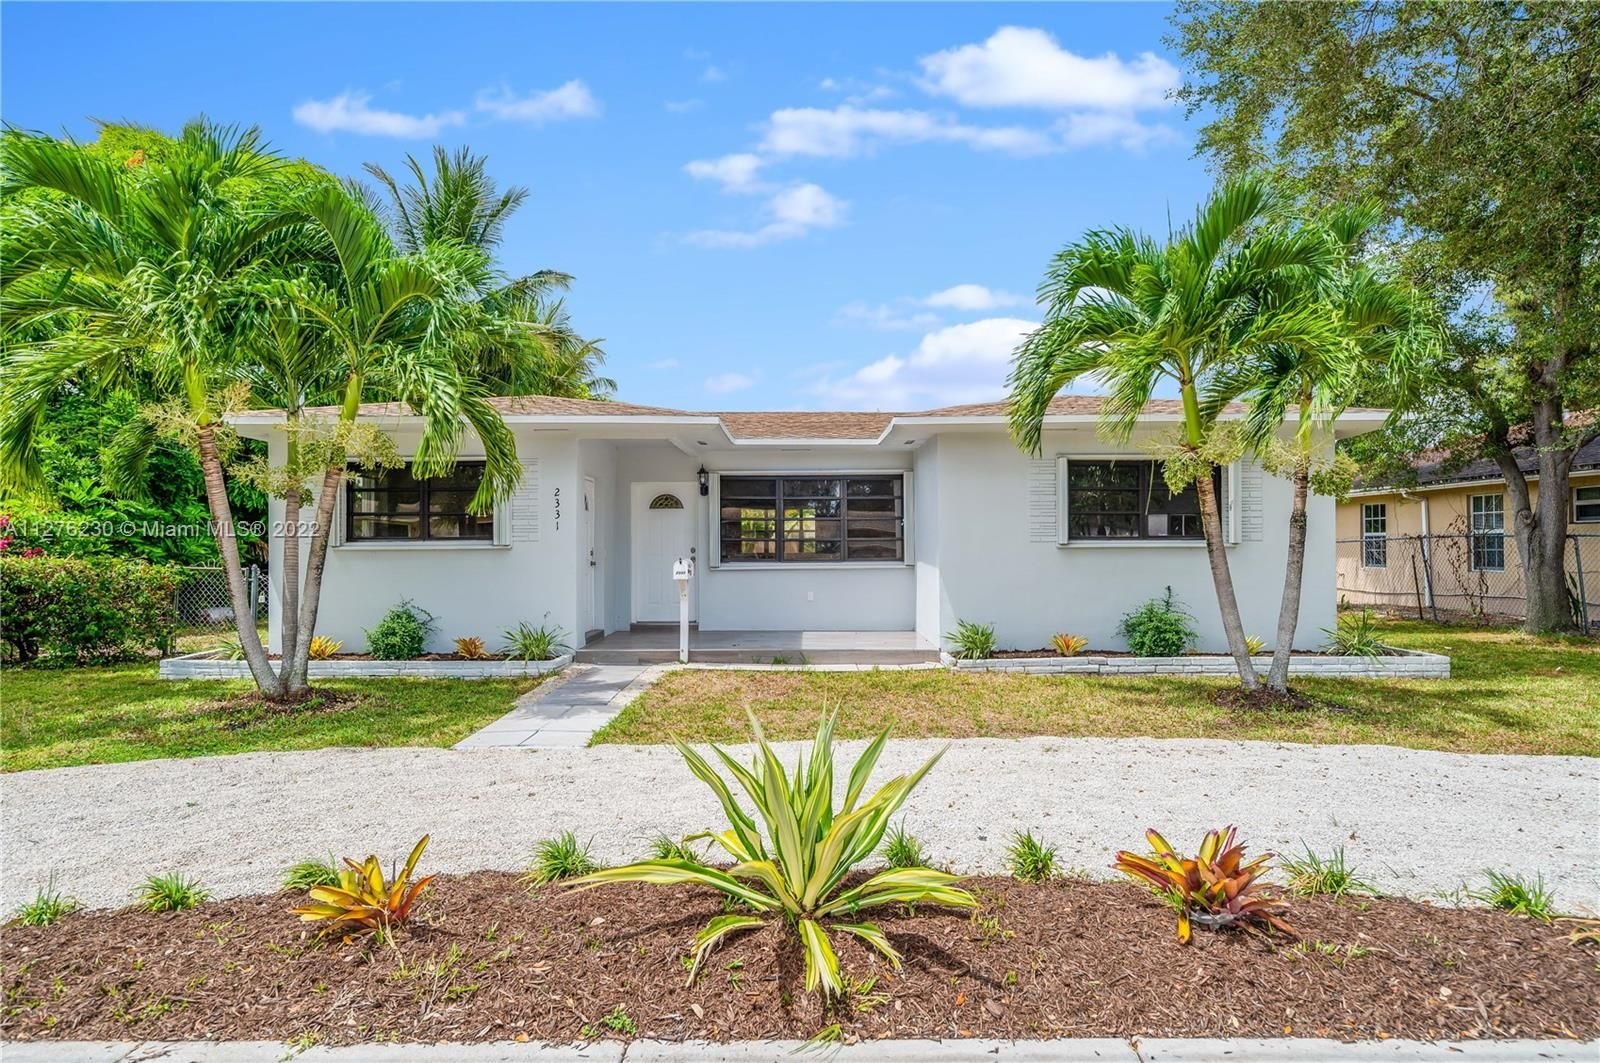 Real estate property located at 2331 96th St, Miami-Dade County, Miami, FL